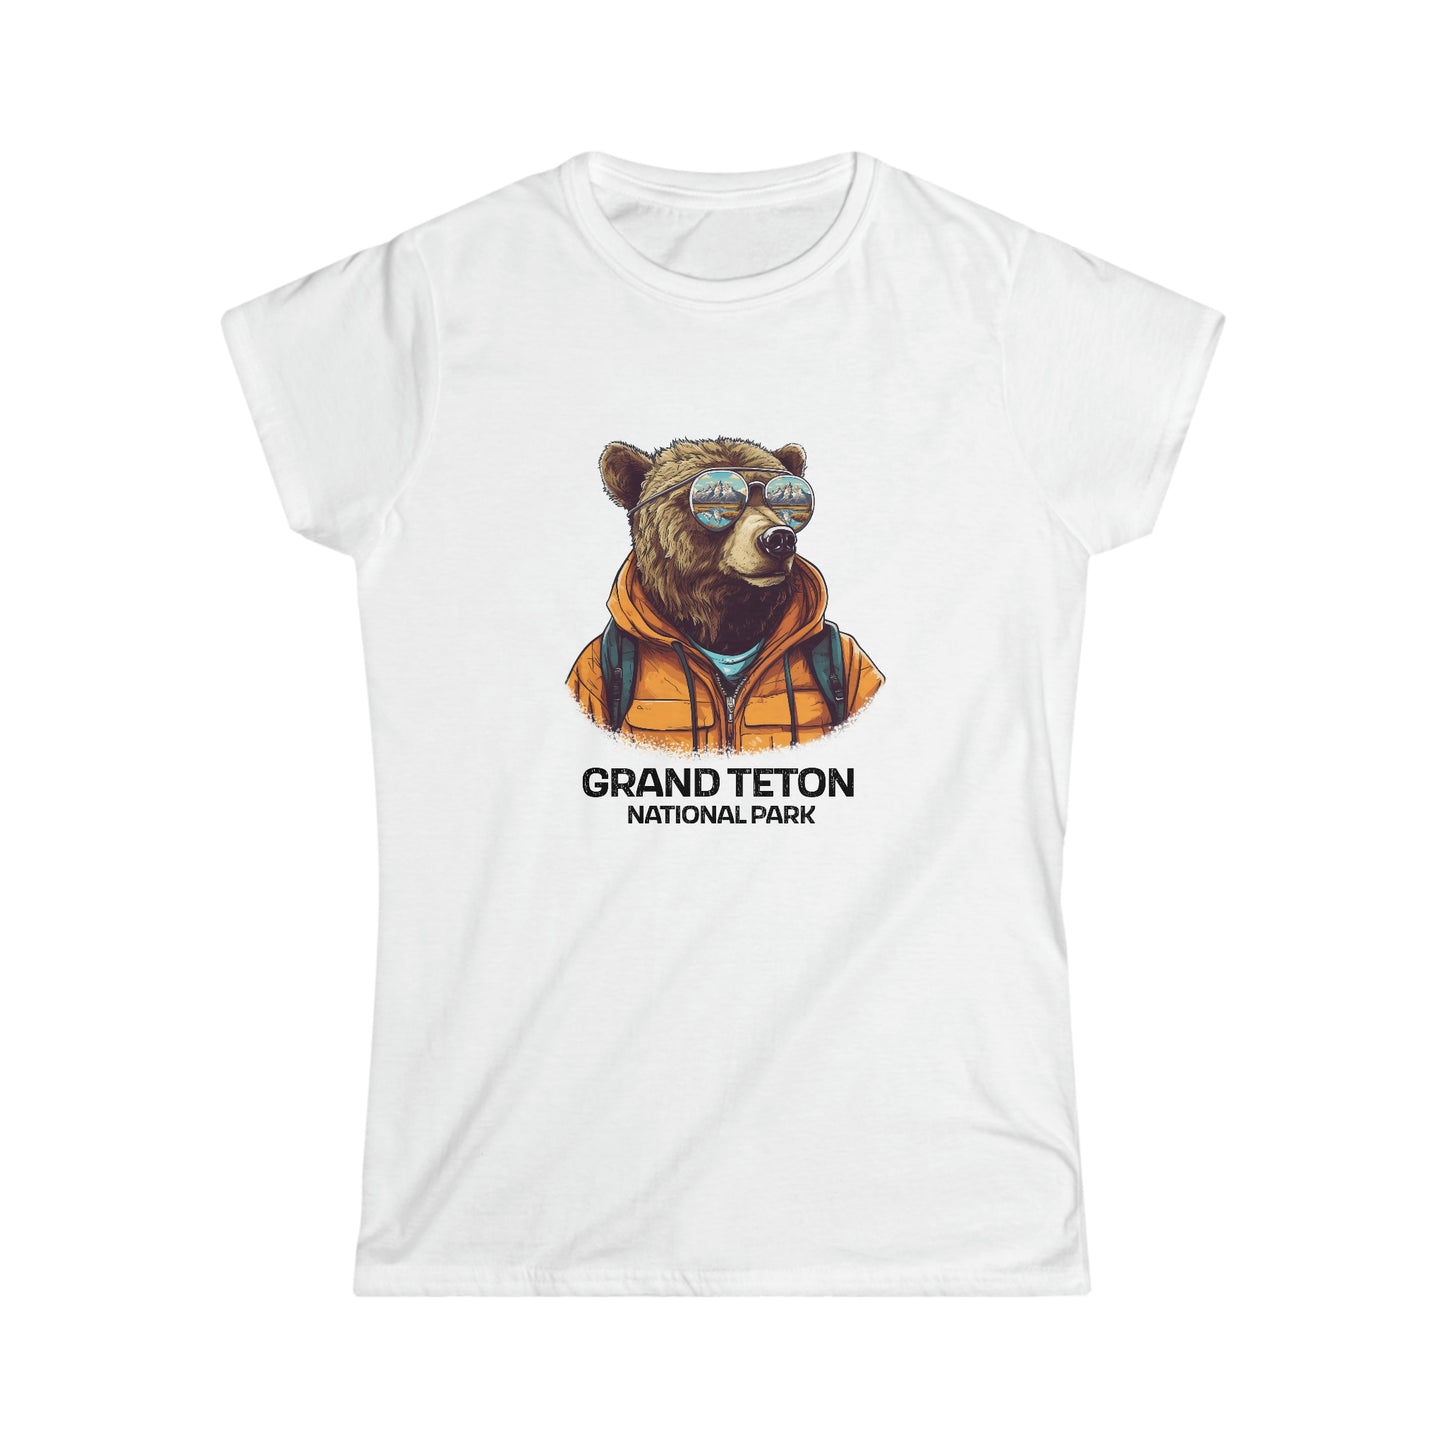 Grand Teton National Park Women's T-Shirt - Cool Grizzly Bear